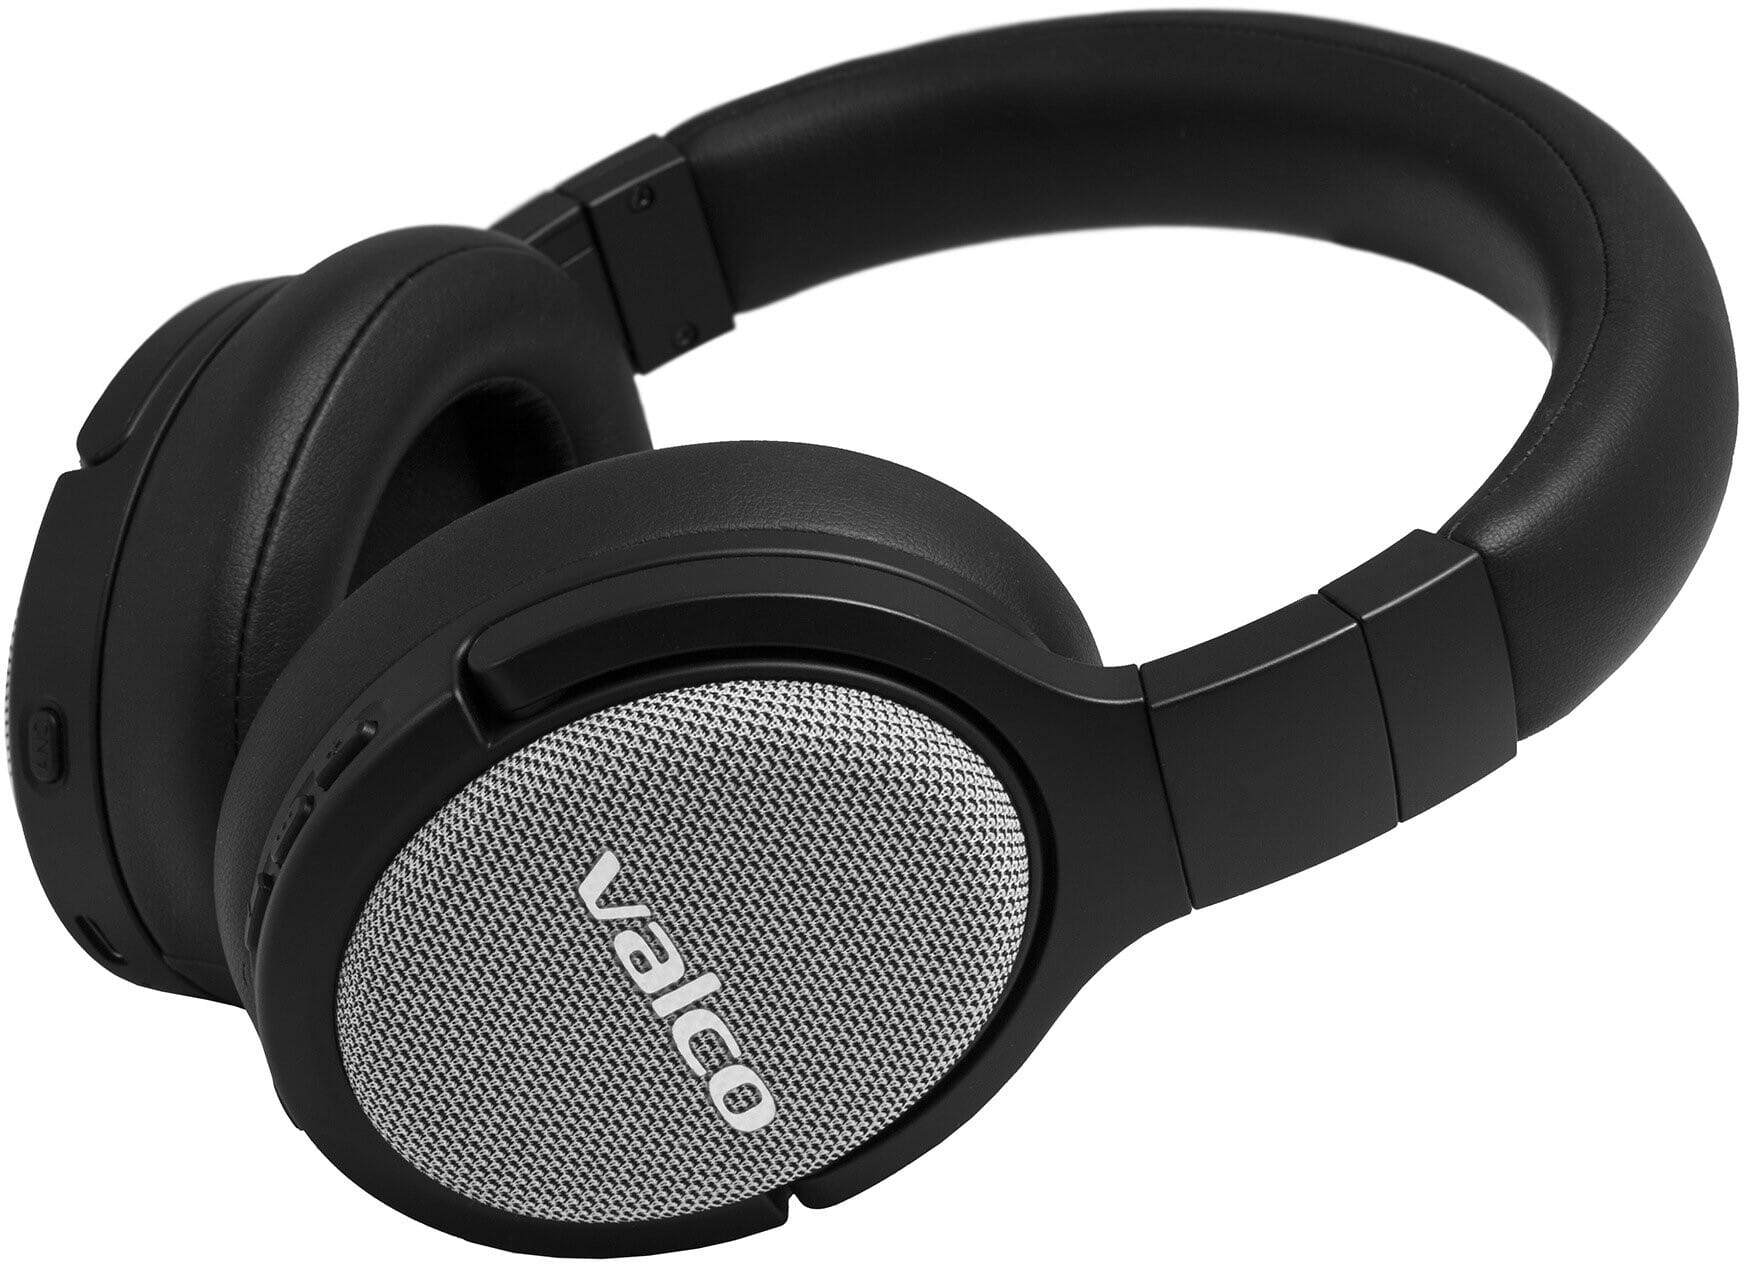 Valco VMK20 Wireless ANC Headphones - Svart